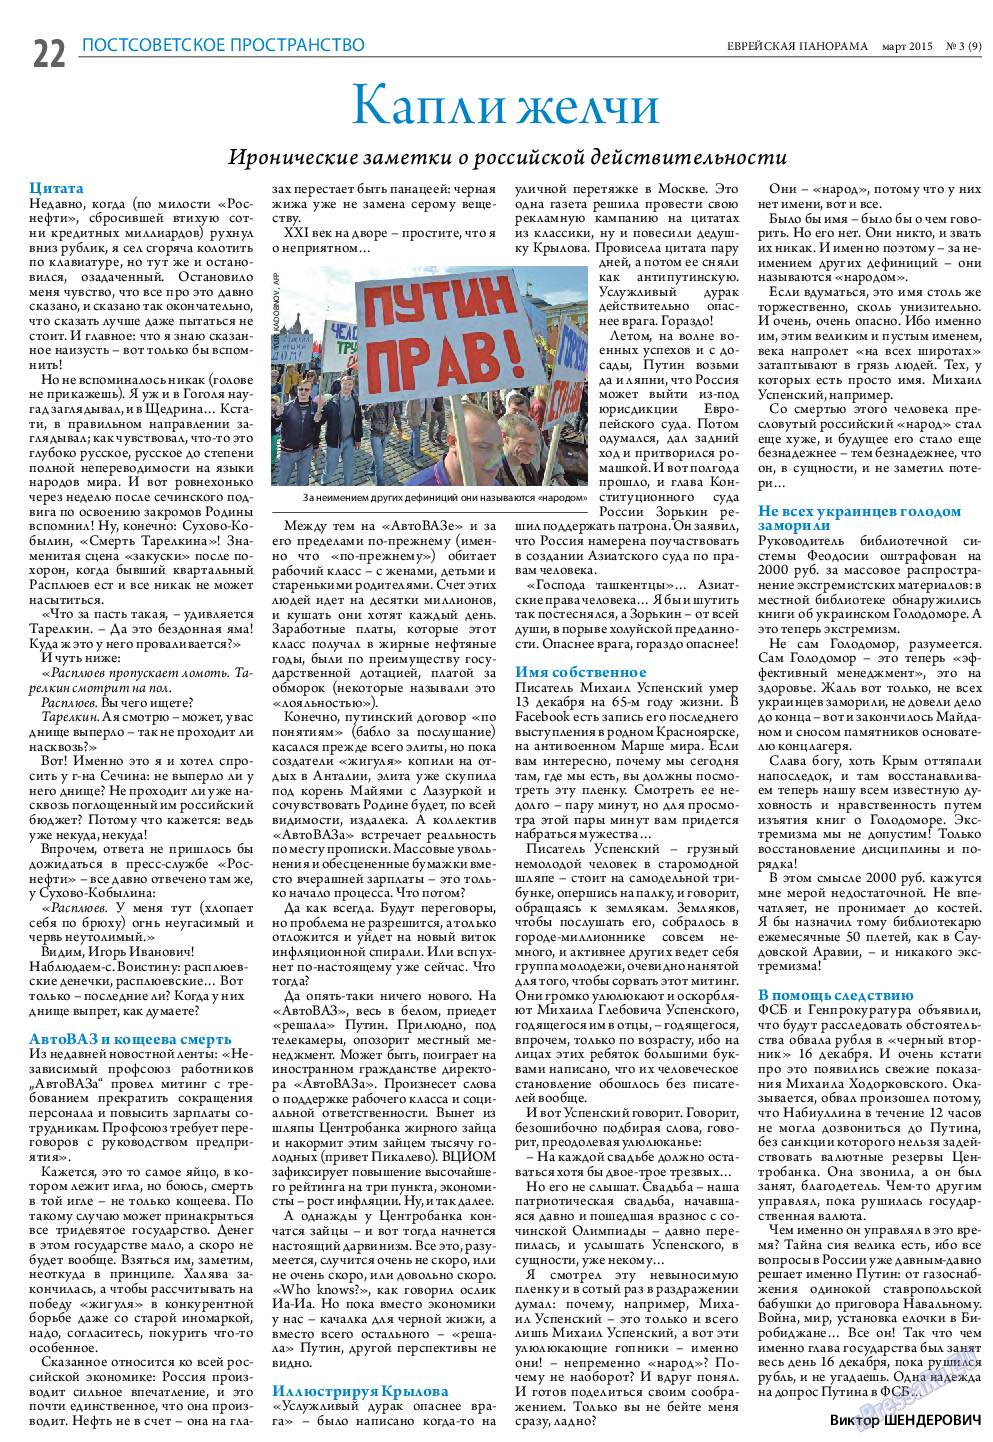 Еврейская панорама, газета. 2015 №3 стр.22